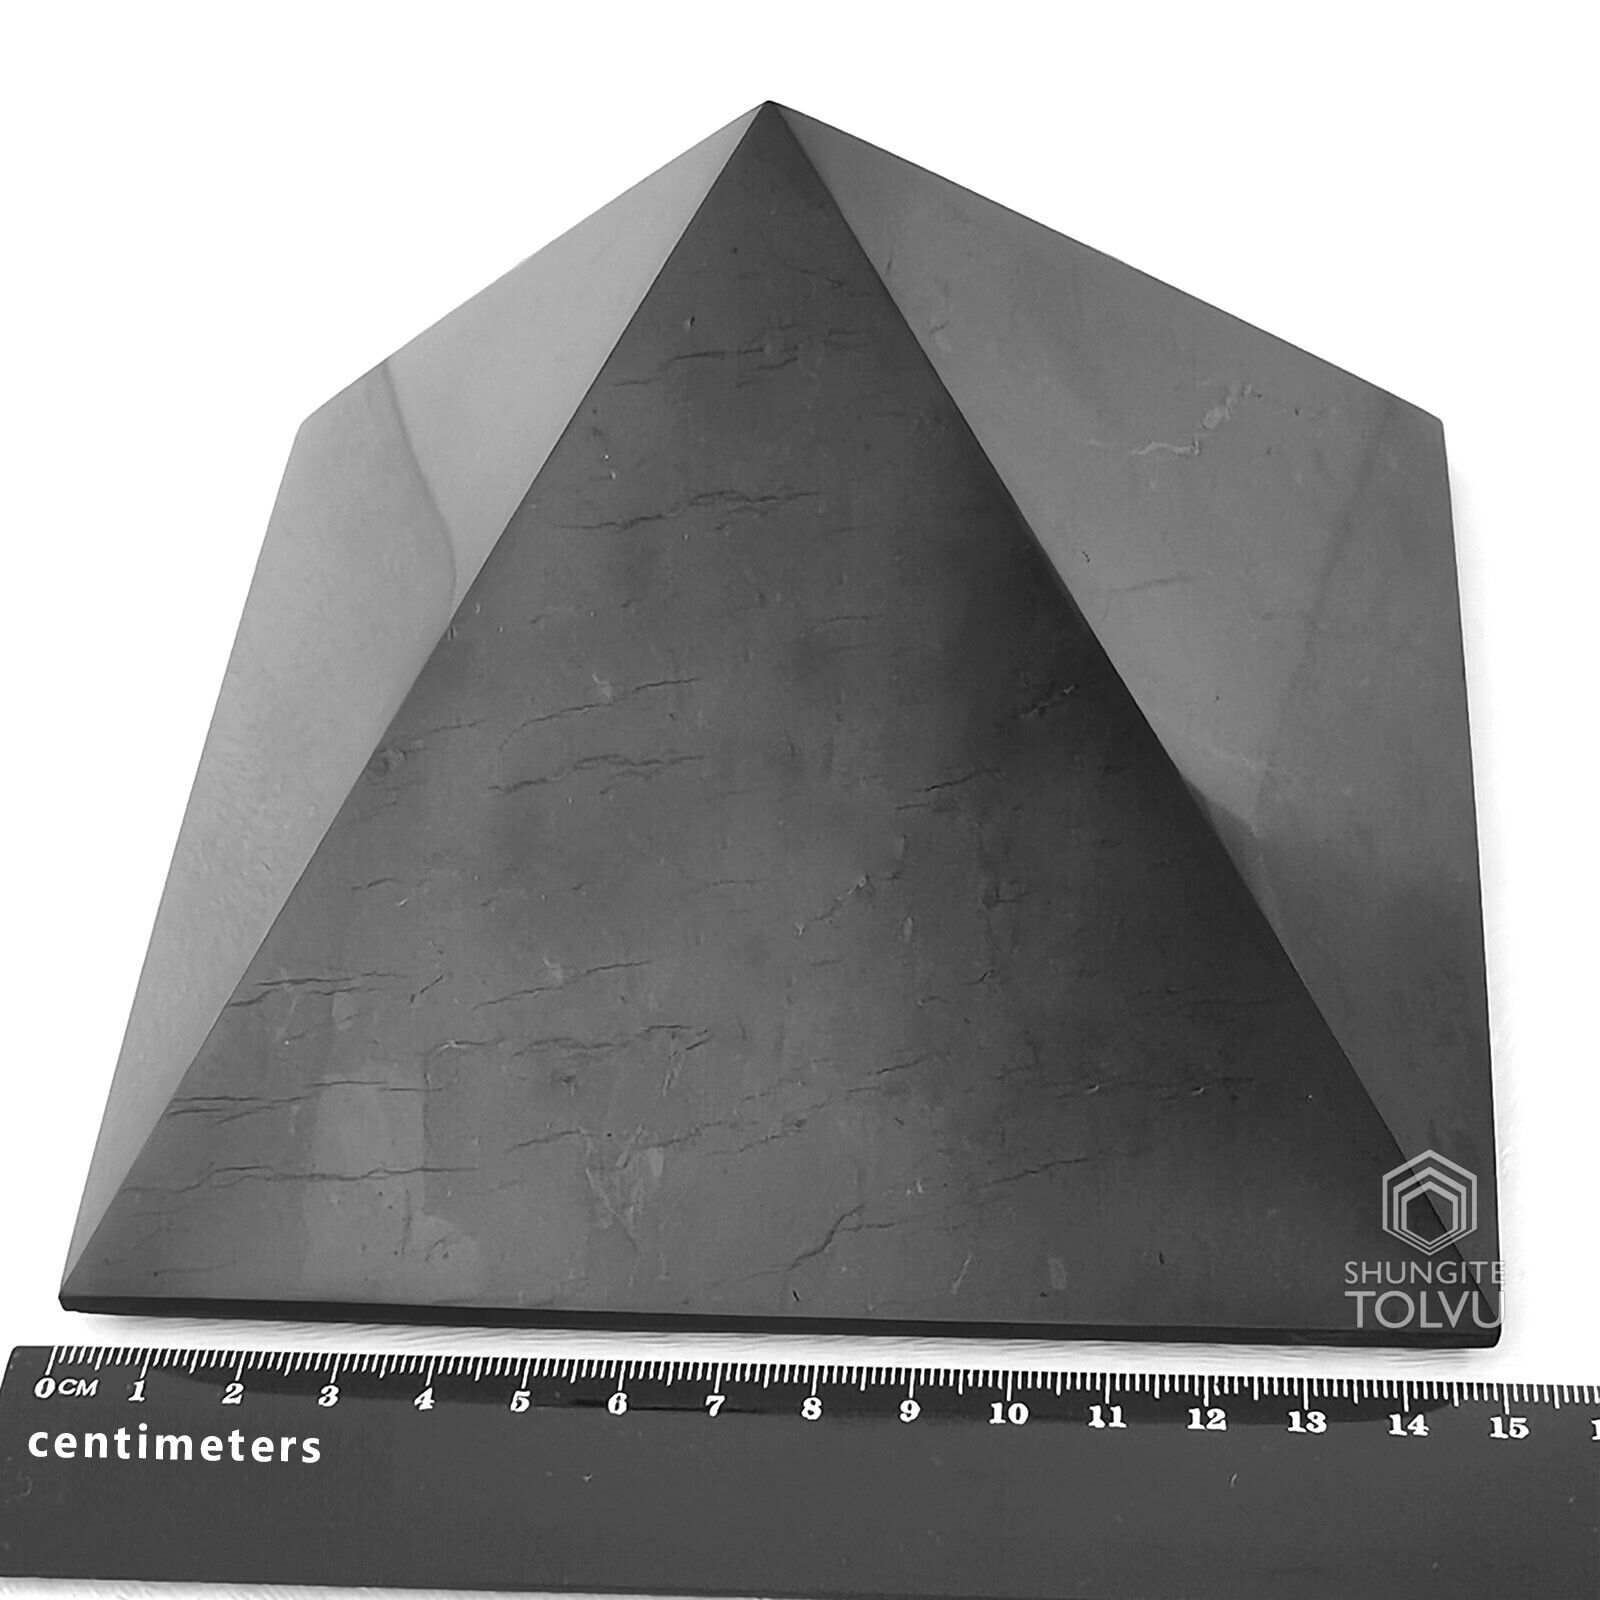 Extra Big Shungite Pyramid 5.9 in  Real shungite stone - Genuine - Tolvu